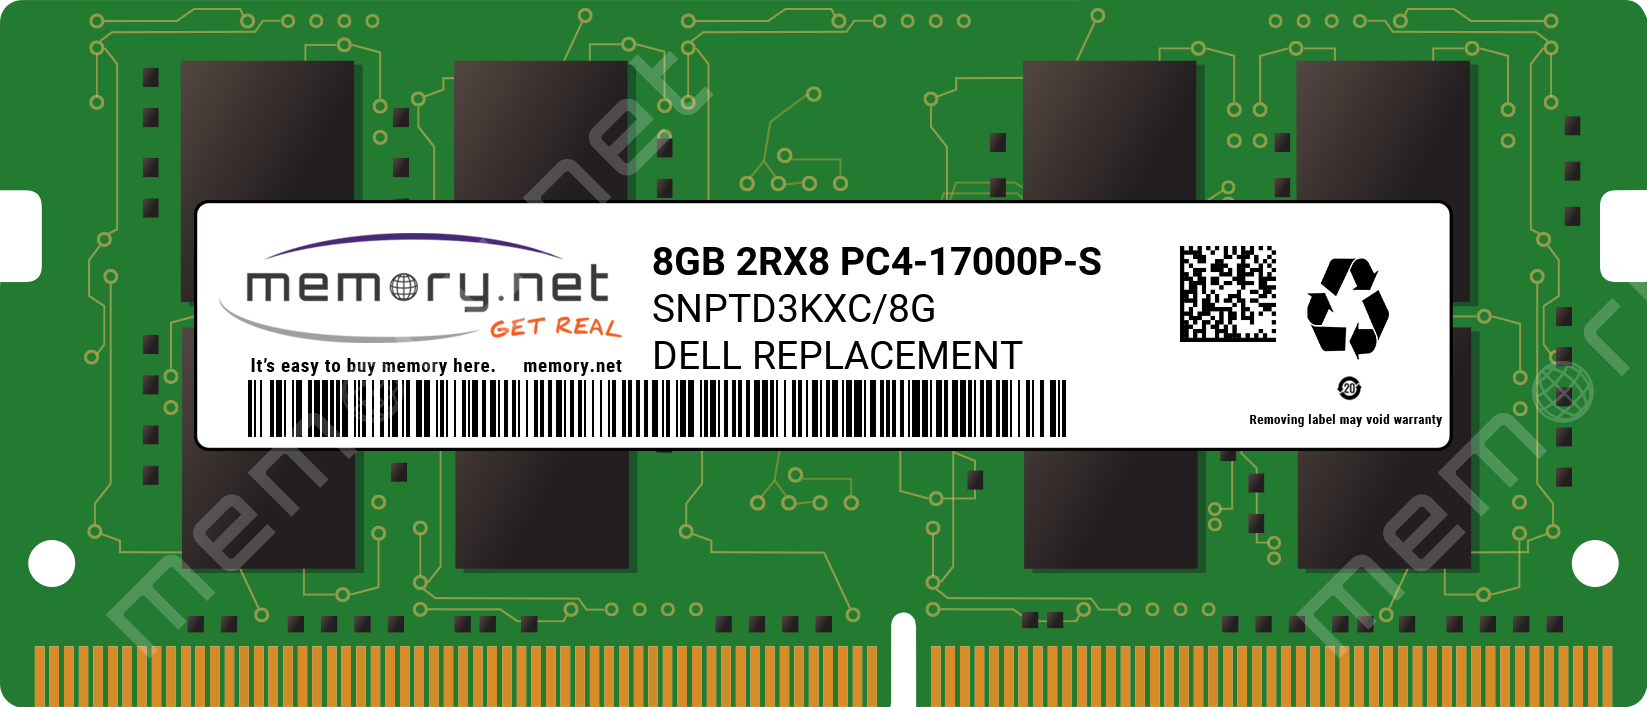 SNPTD3KXC/8G - Dell 1x 8GB DDR4-2133 SODIMM PC4-17000P-S Dual Rank x8  Replacement